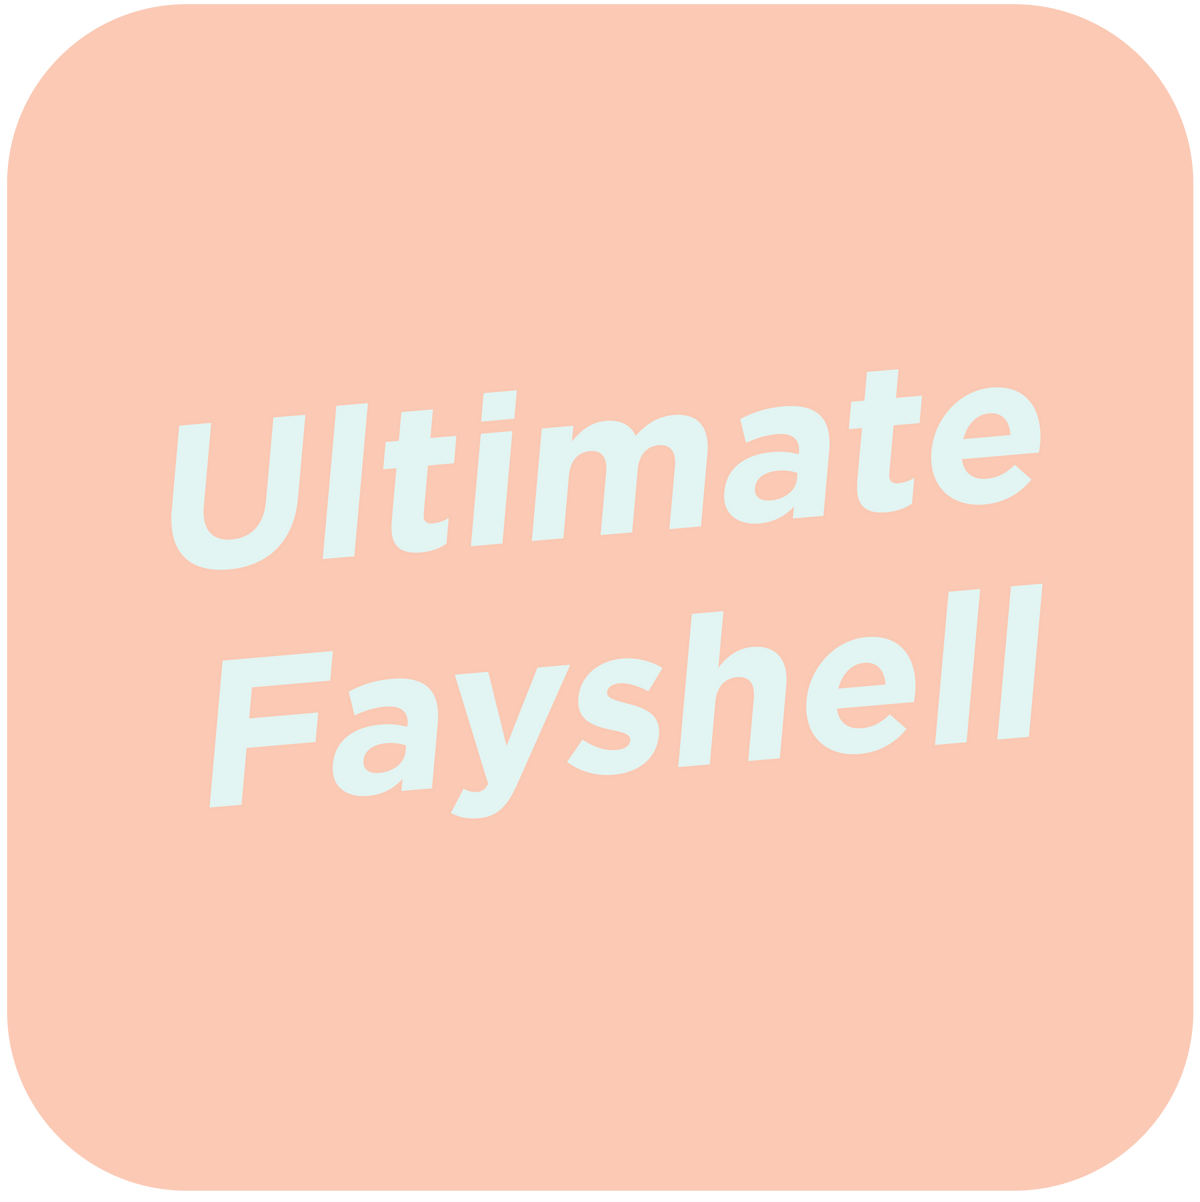 Ultimate Fayshell